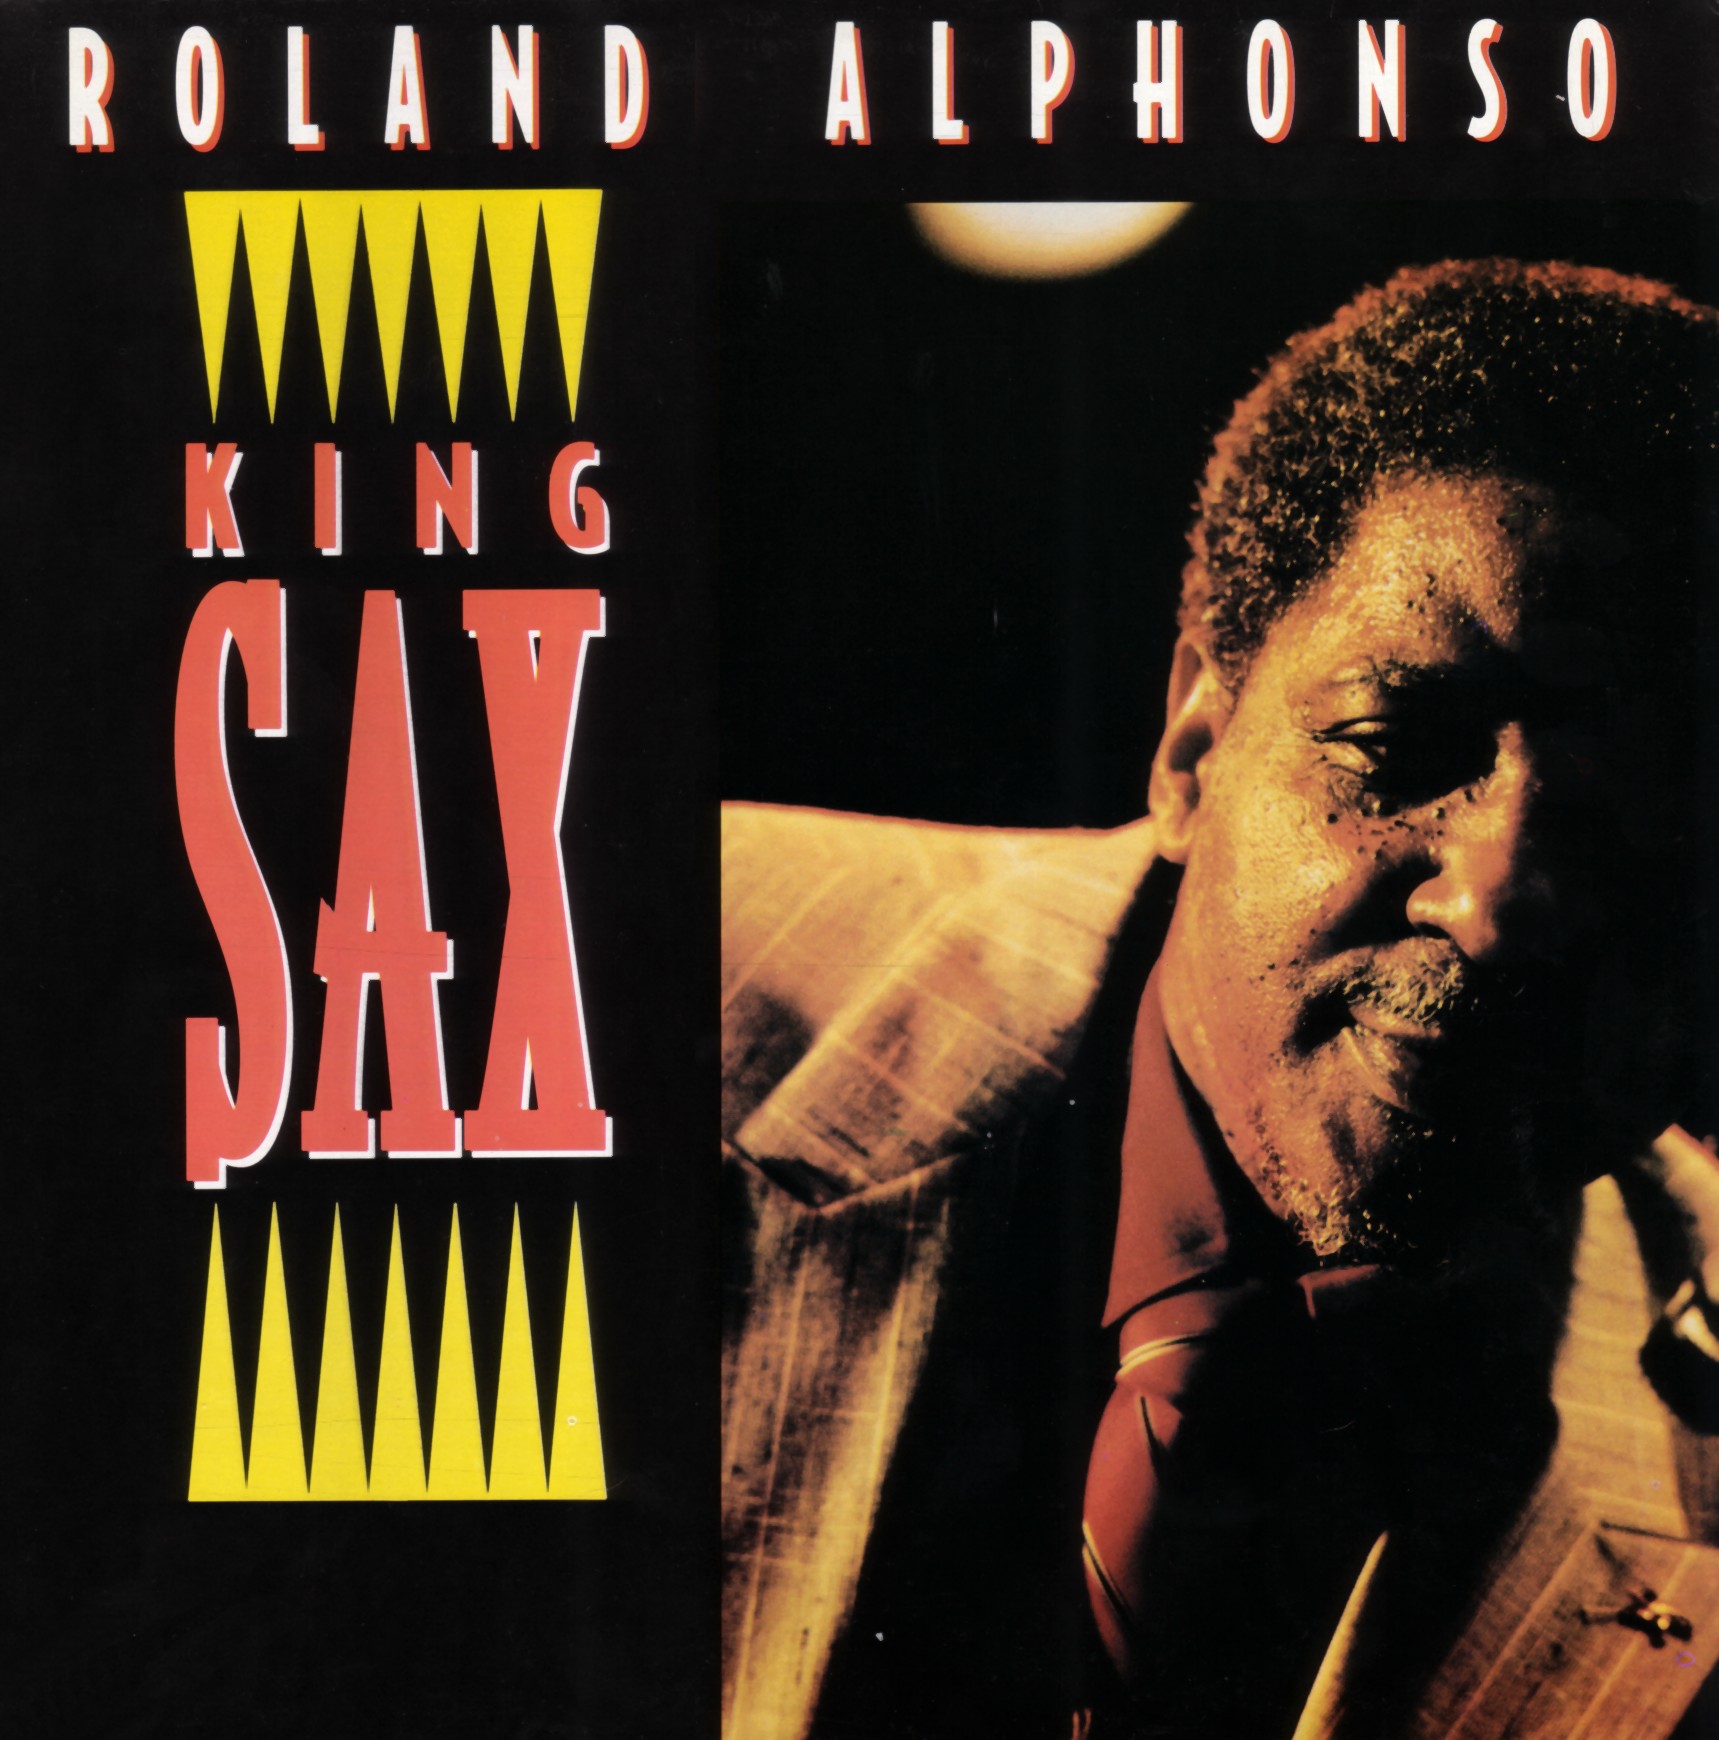 ROLAND ALPHONSO - King of Sax (1975)